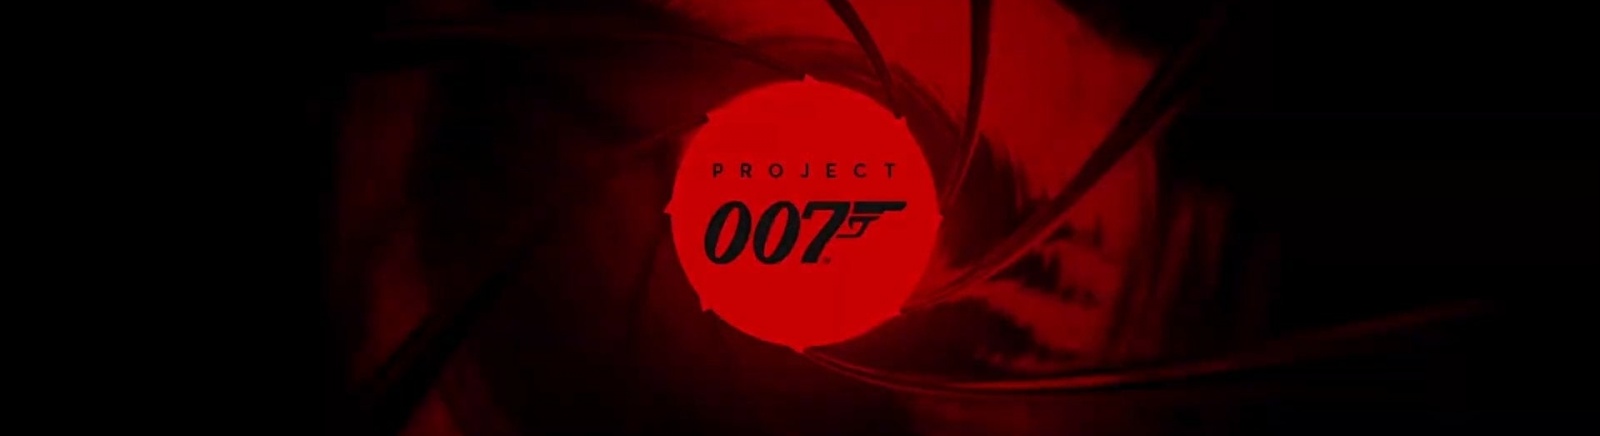 Дата выхода Project 007  на PC, PS5 и Xbox Series X/S в России и во всем мире